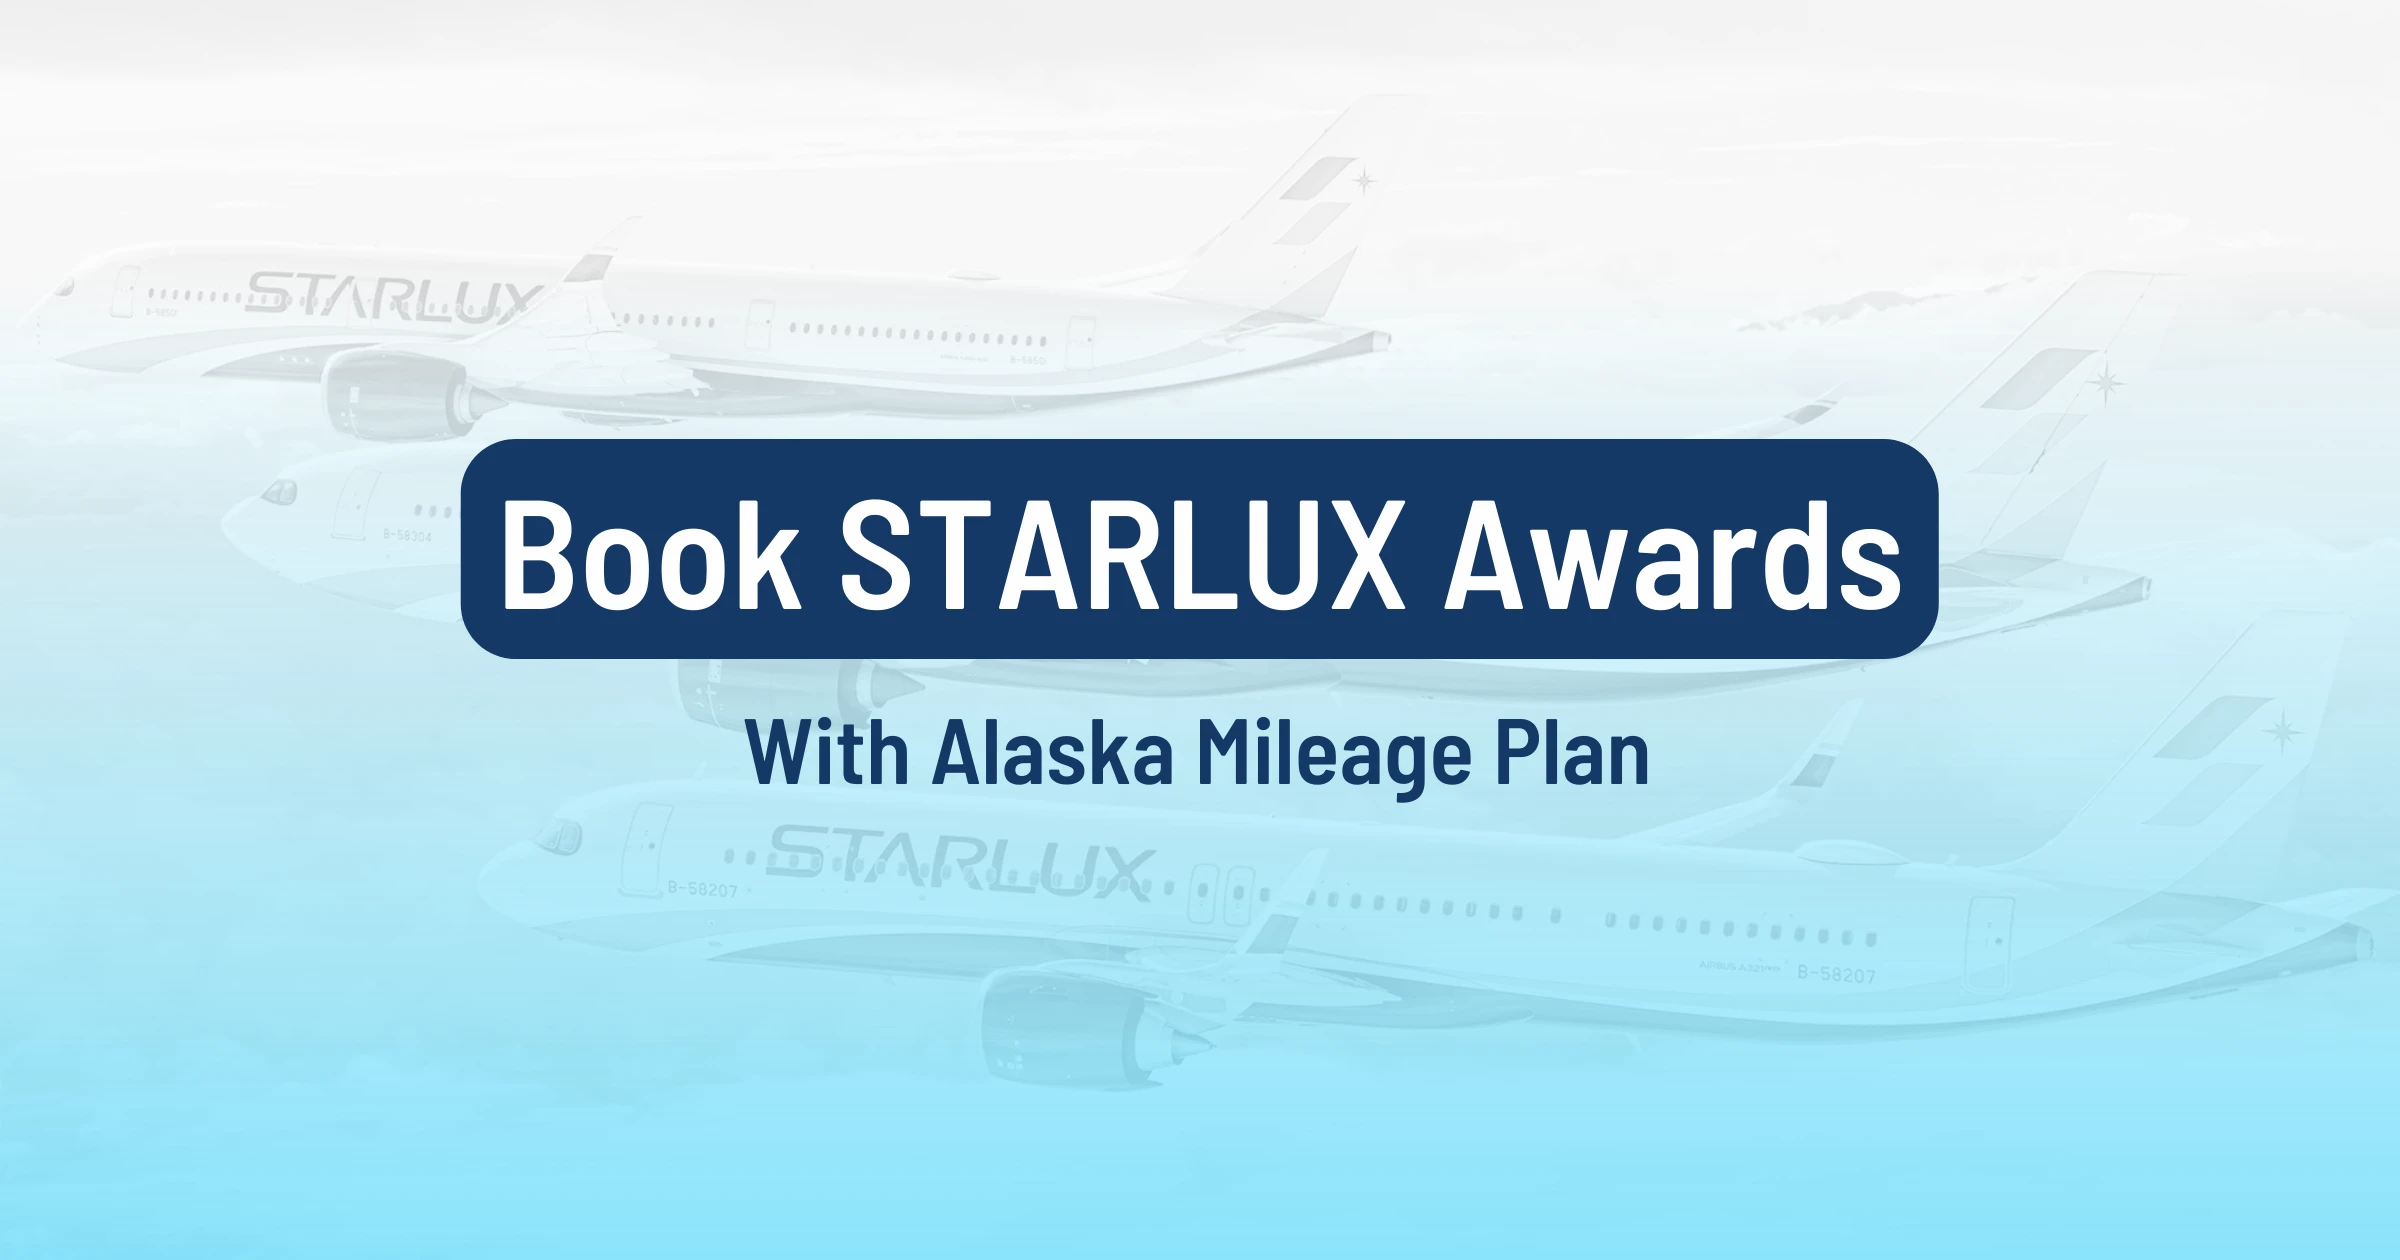 Find STARLUX award flights using AwardFares.